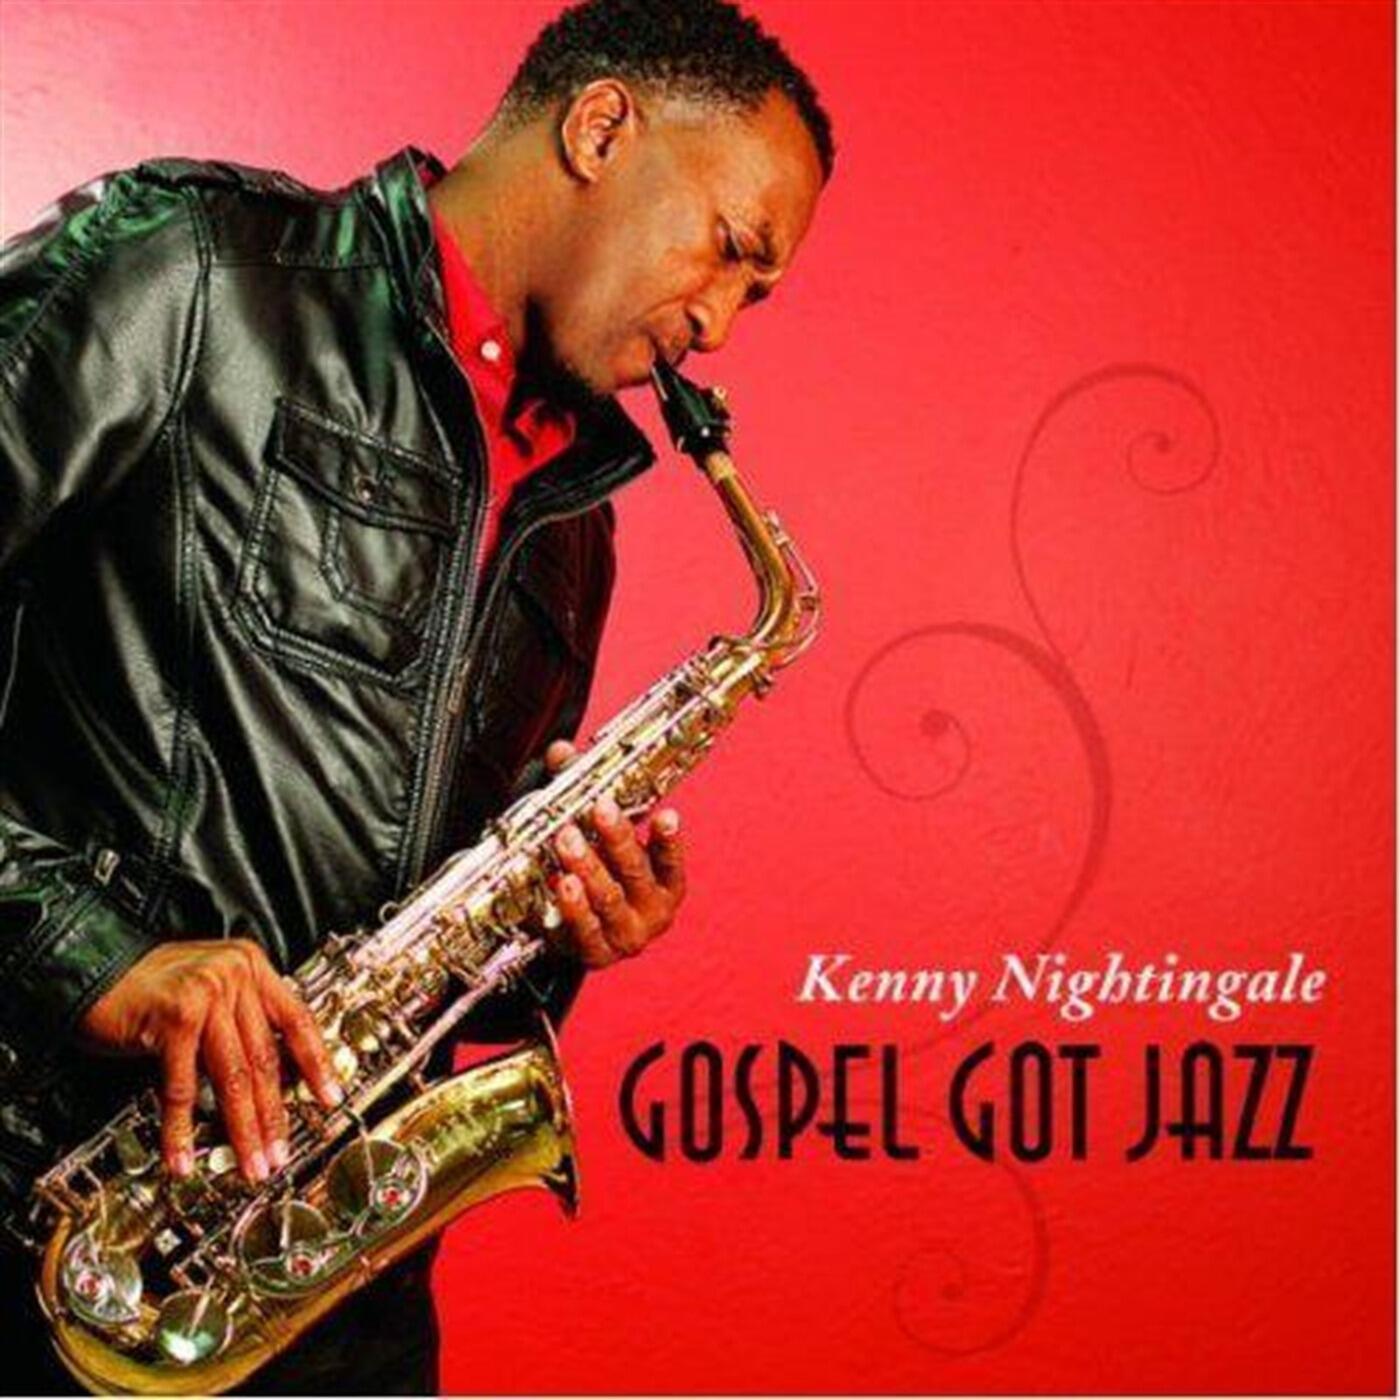 Kenny Nightingale Gospel Got Jazz (Instrumental) iHeart